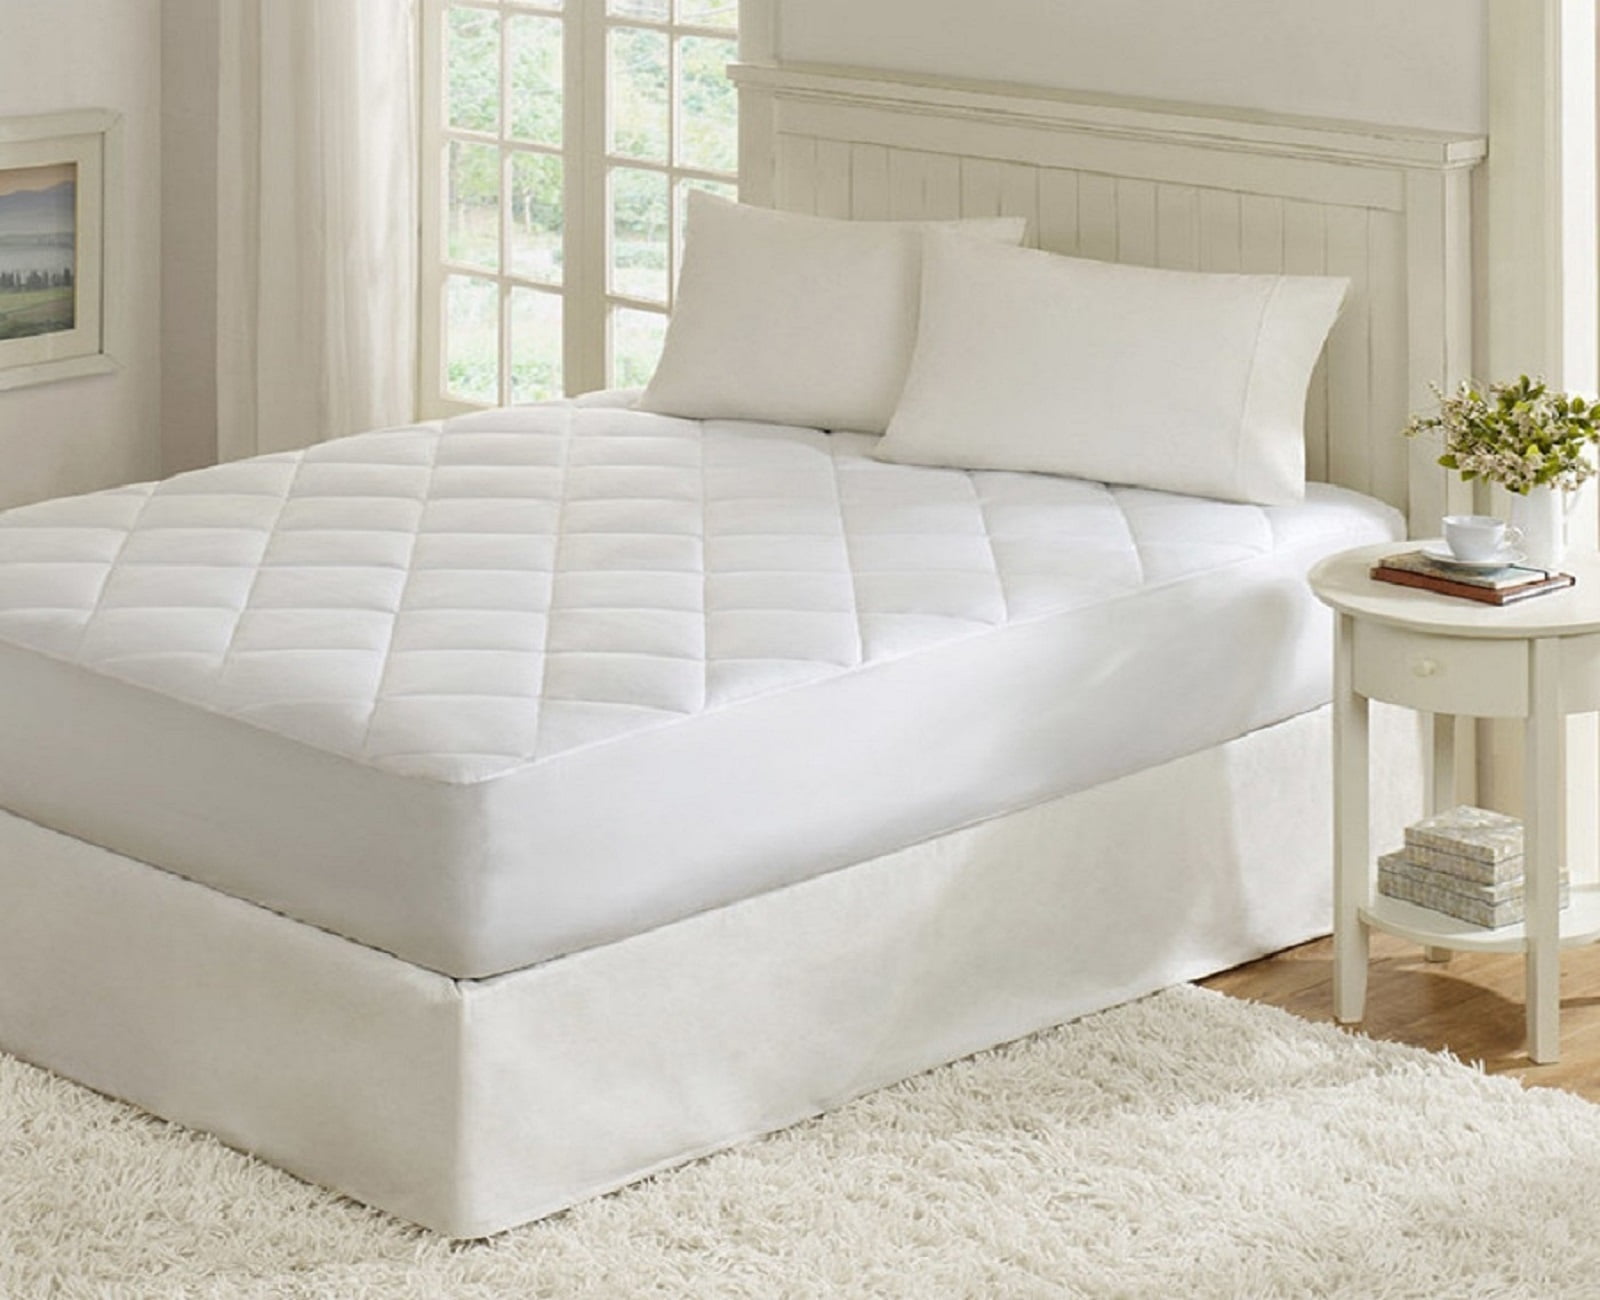 queen size waterproof mattress cover target